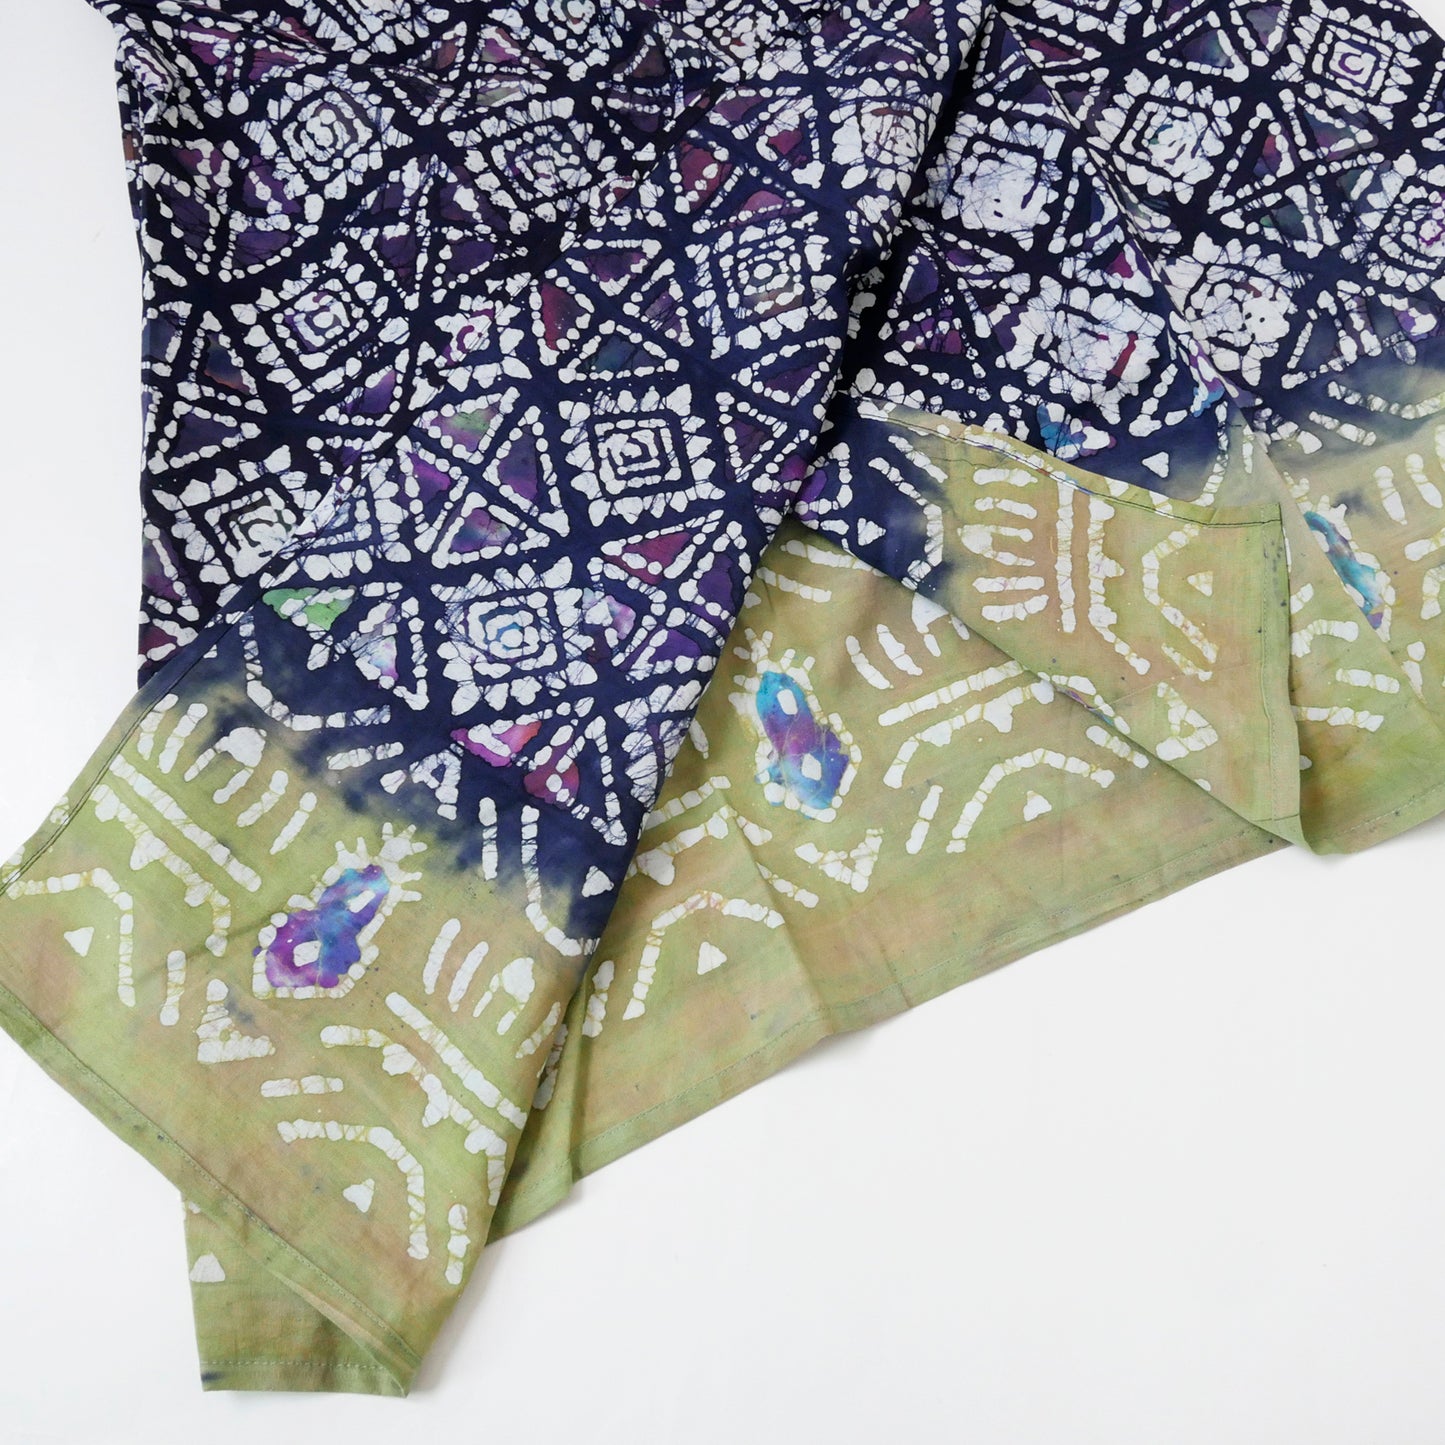 Cotton Batik Print Sleeveless Dress